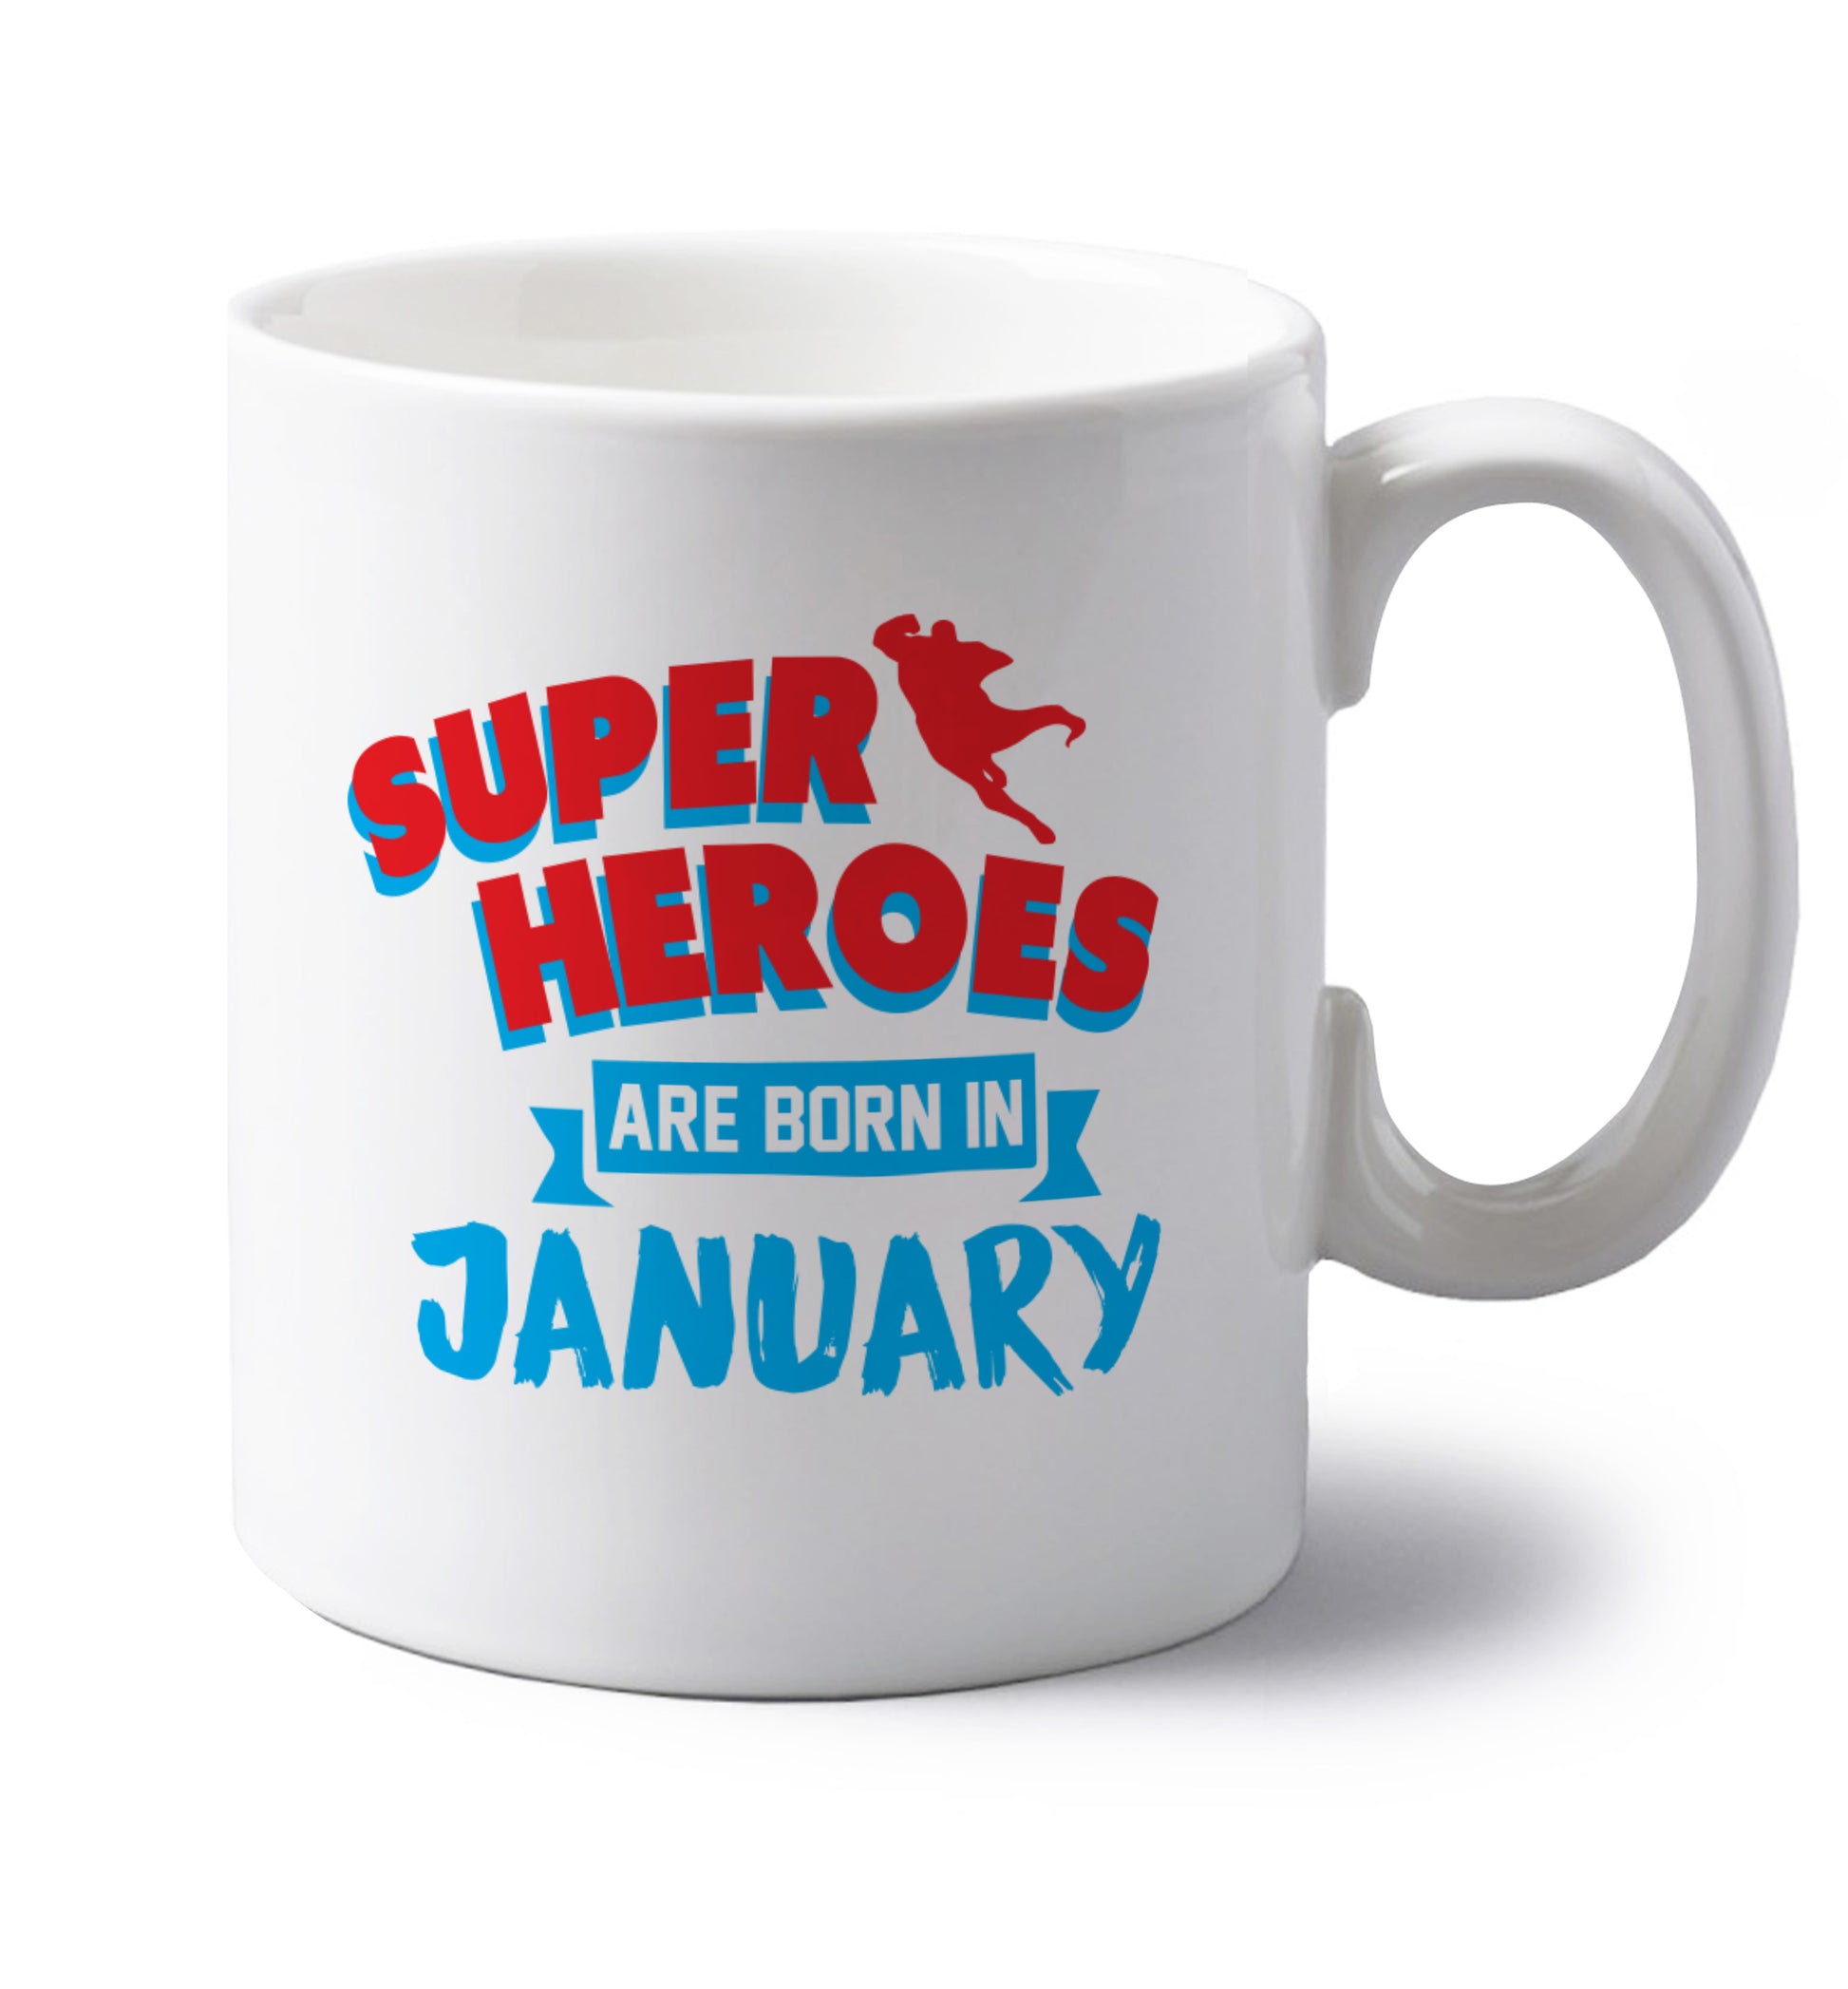 Superheros are born in January left handed white ceramic mug 